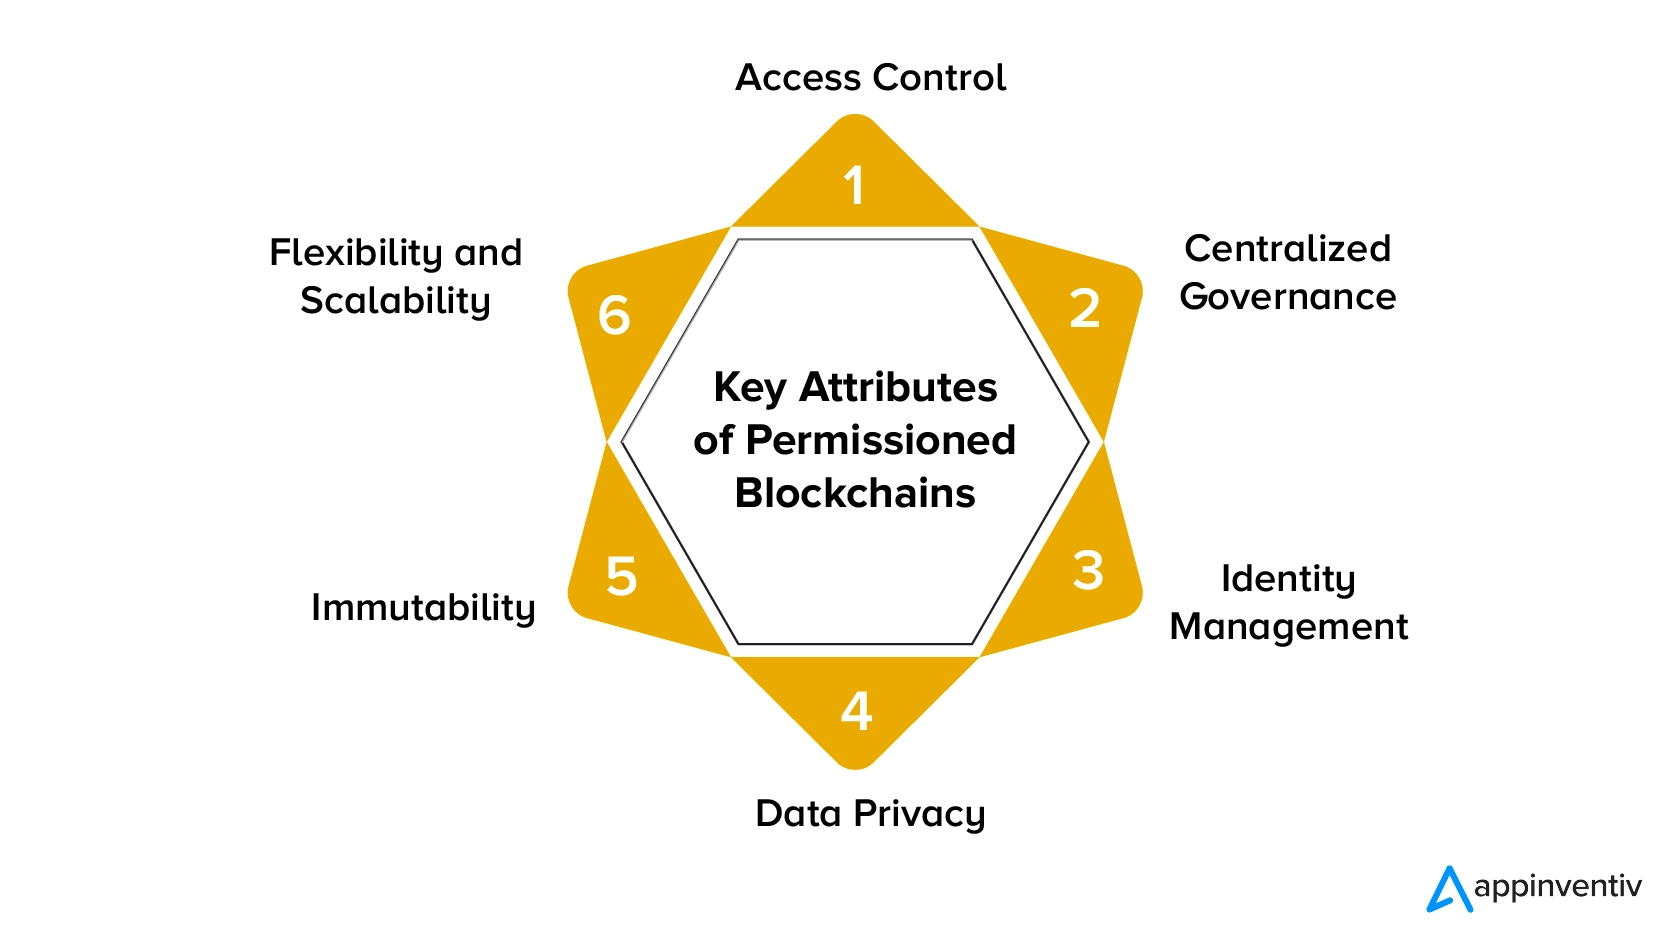 Key Attributes of Permissioned Blockchains